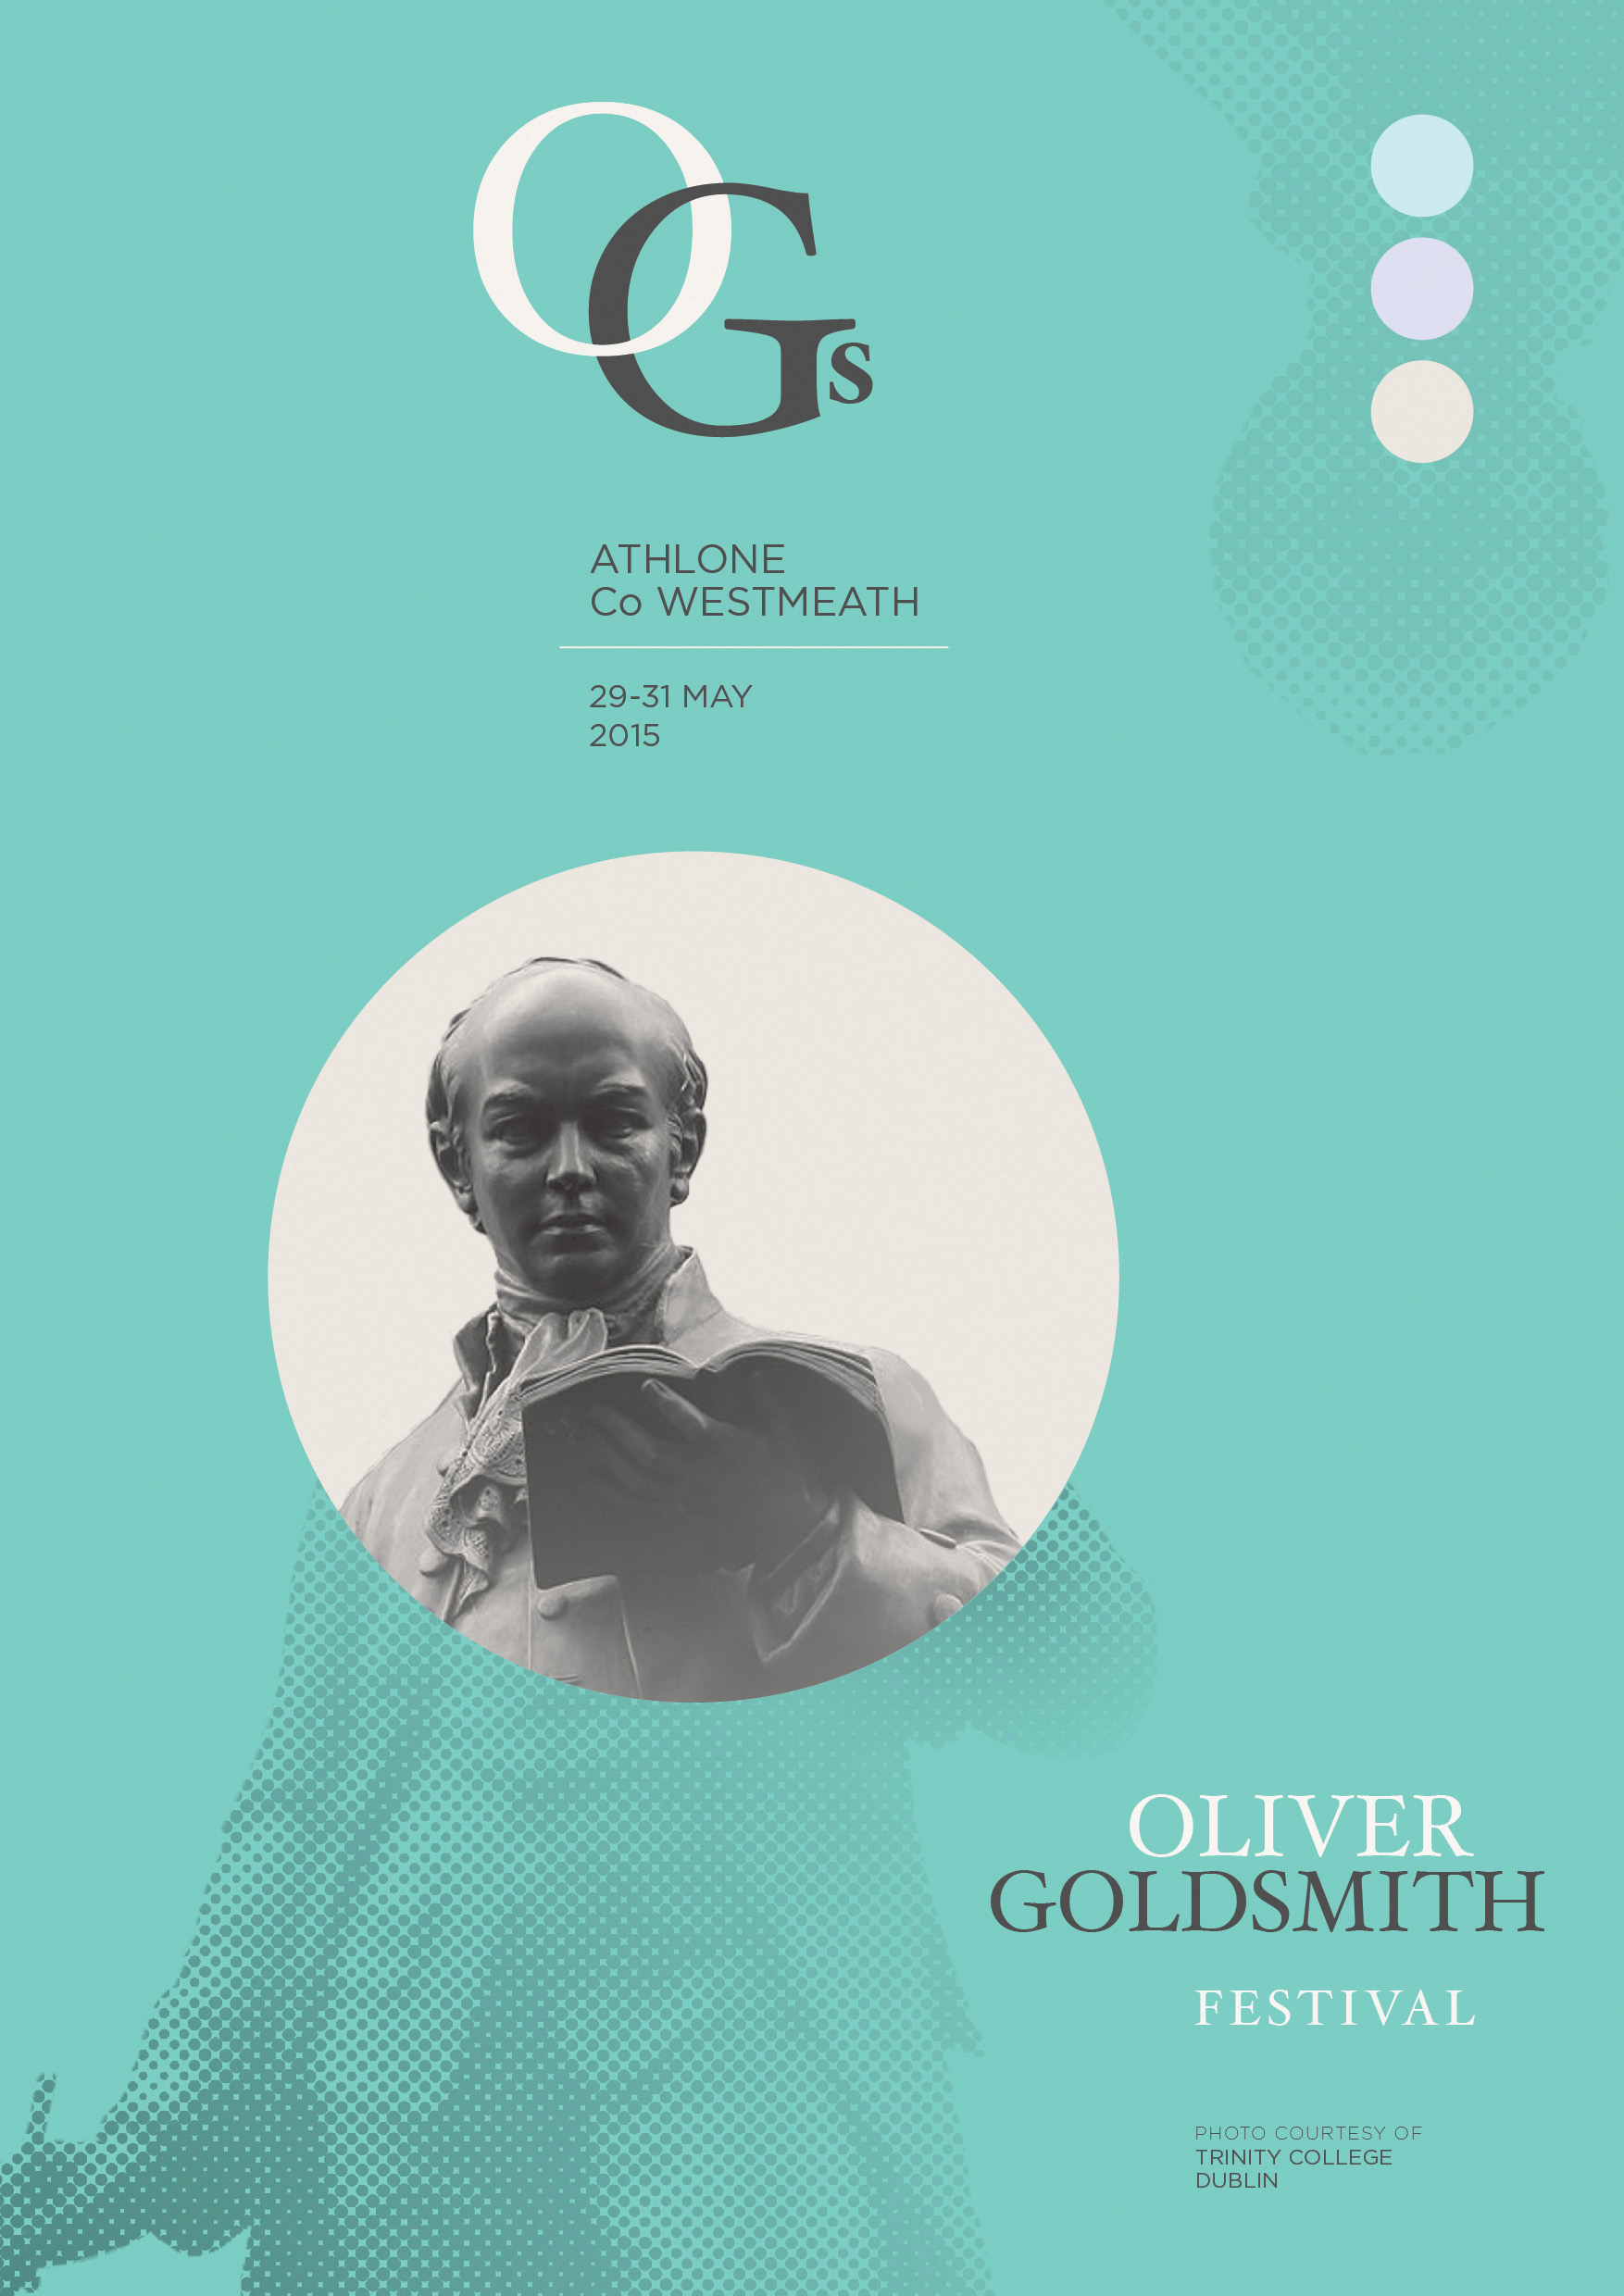 Oliver Goldsmith festival poster